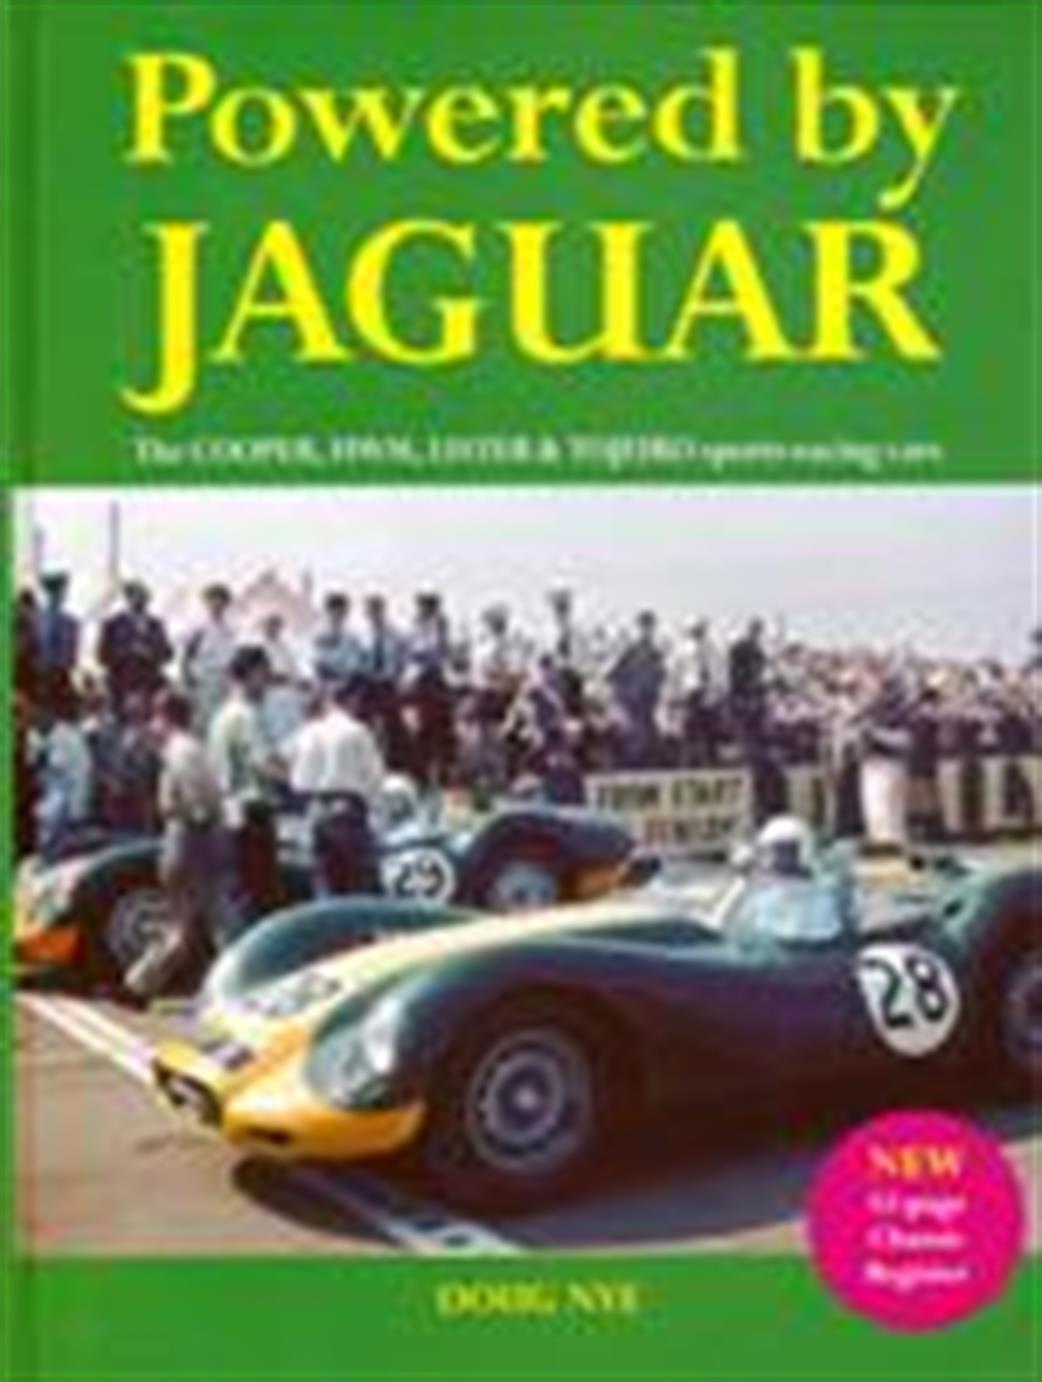 9781899870776 Powered by Jaguar by Doug Nye